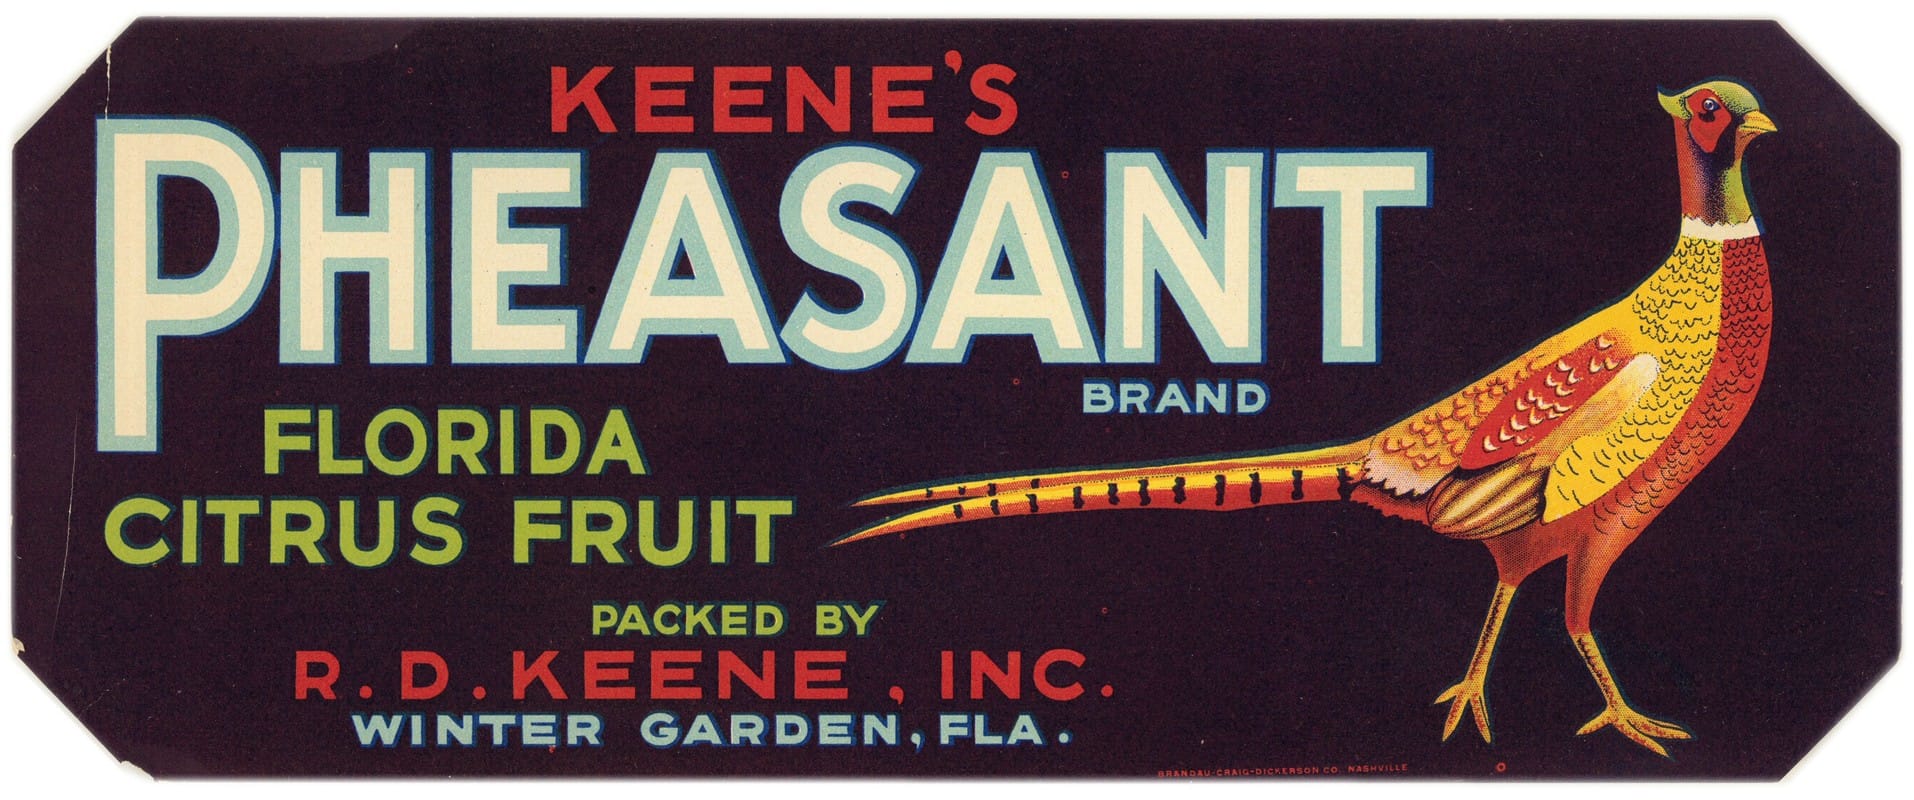 Anonymous - Keene’s Pheasant Brand Florida Citrus Fruit Label